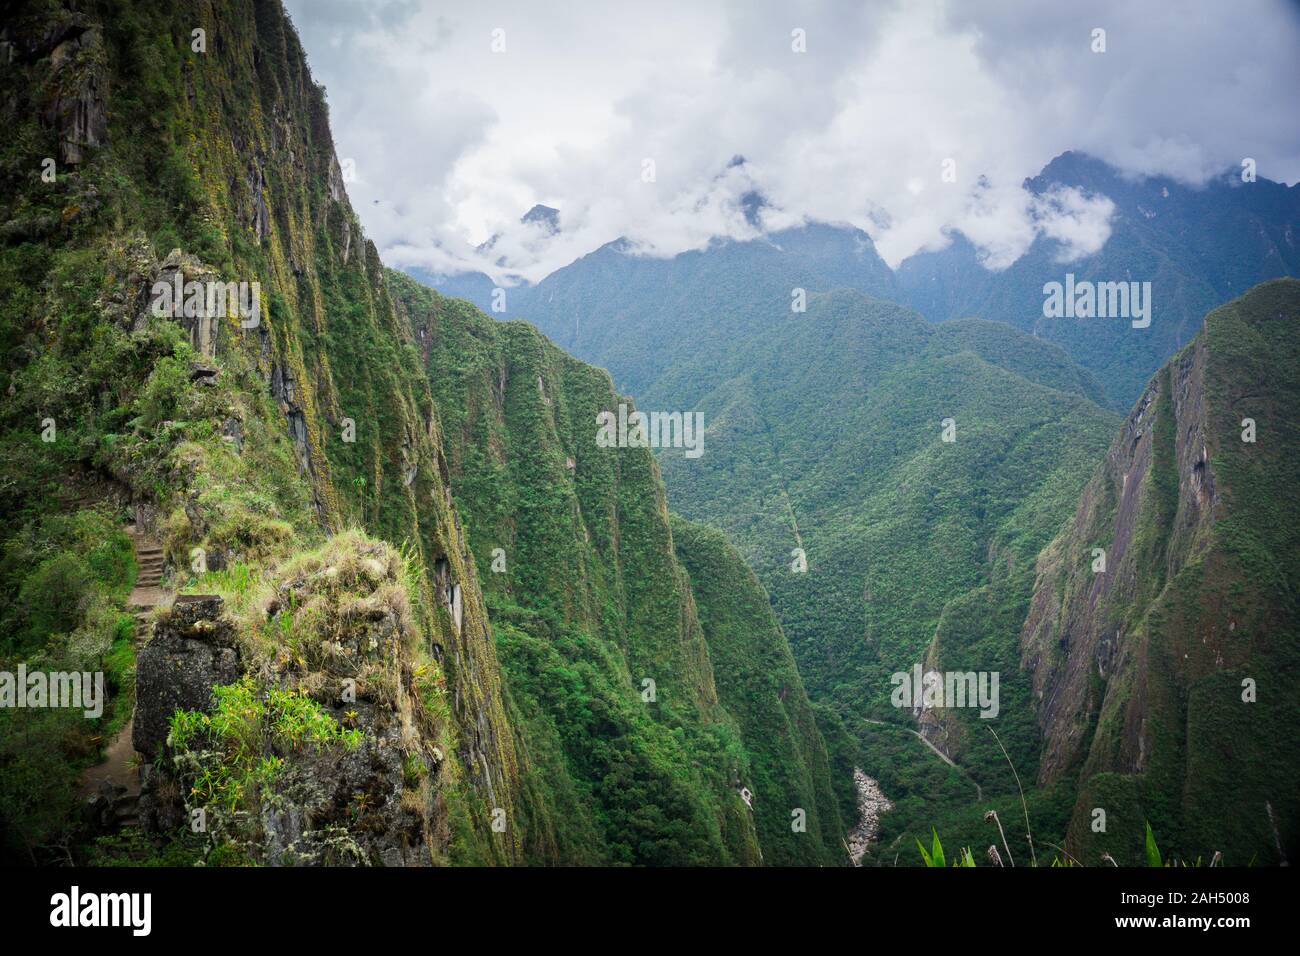 The best view of Machu Picchu from the Wayna Picchu Mountain, Huayna Picchu, Cusco Peru Stock Photo